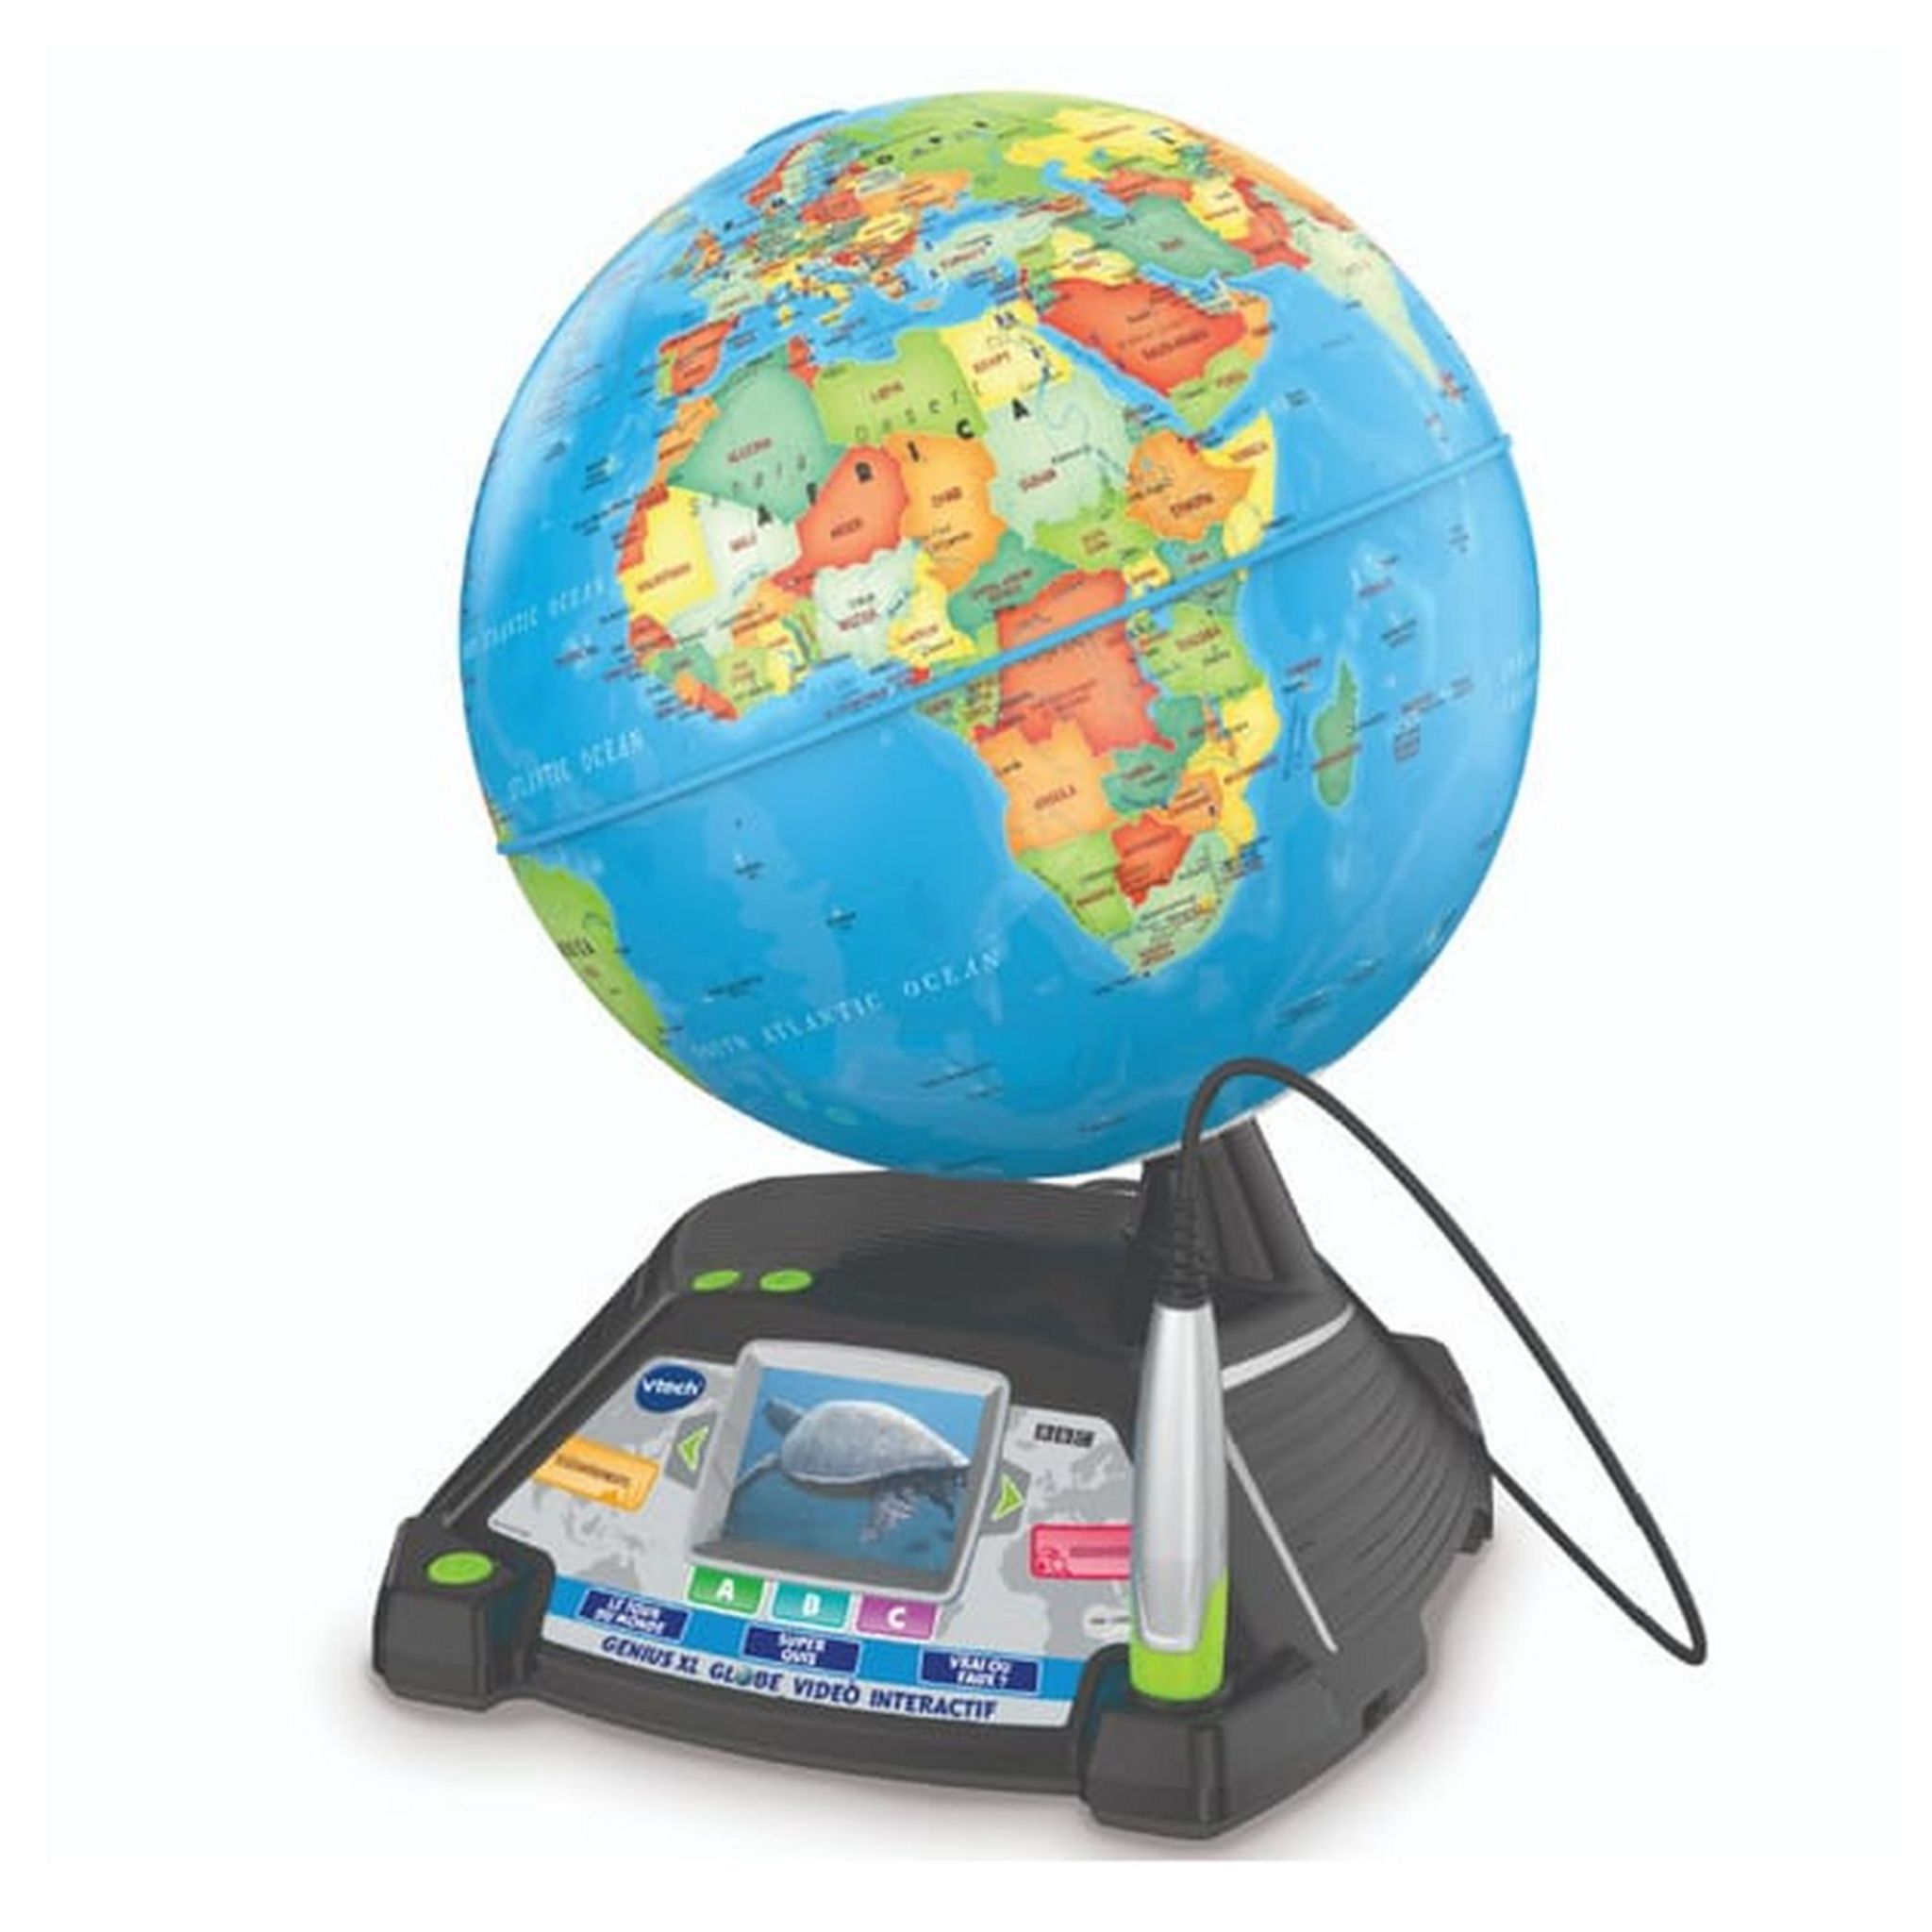 Promo Exploraglobe le globe interactif chez Carrefour Market